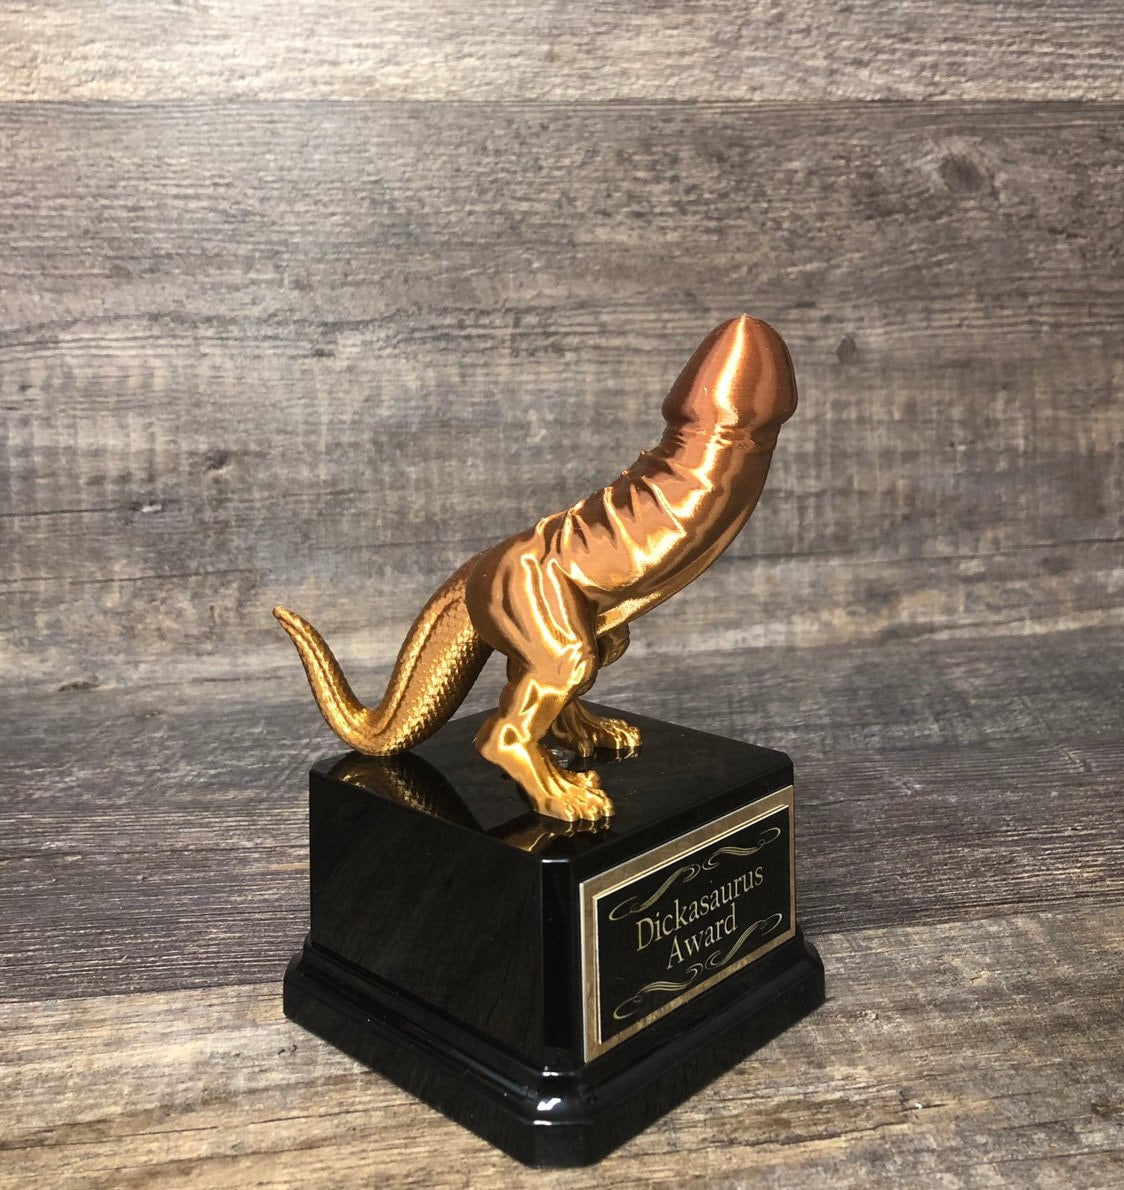 Dickasaurus Funny Trophy Award Adult Humor Gag Gift Bachelorette Party Fantasy Football League LOSER Trophy FFL Last Place Fantasy Penis